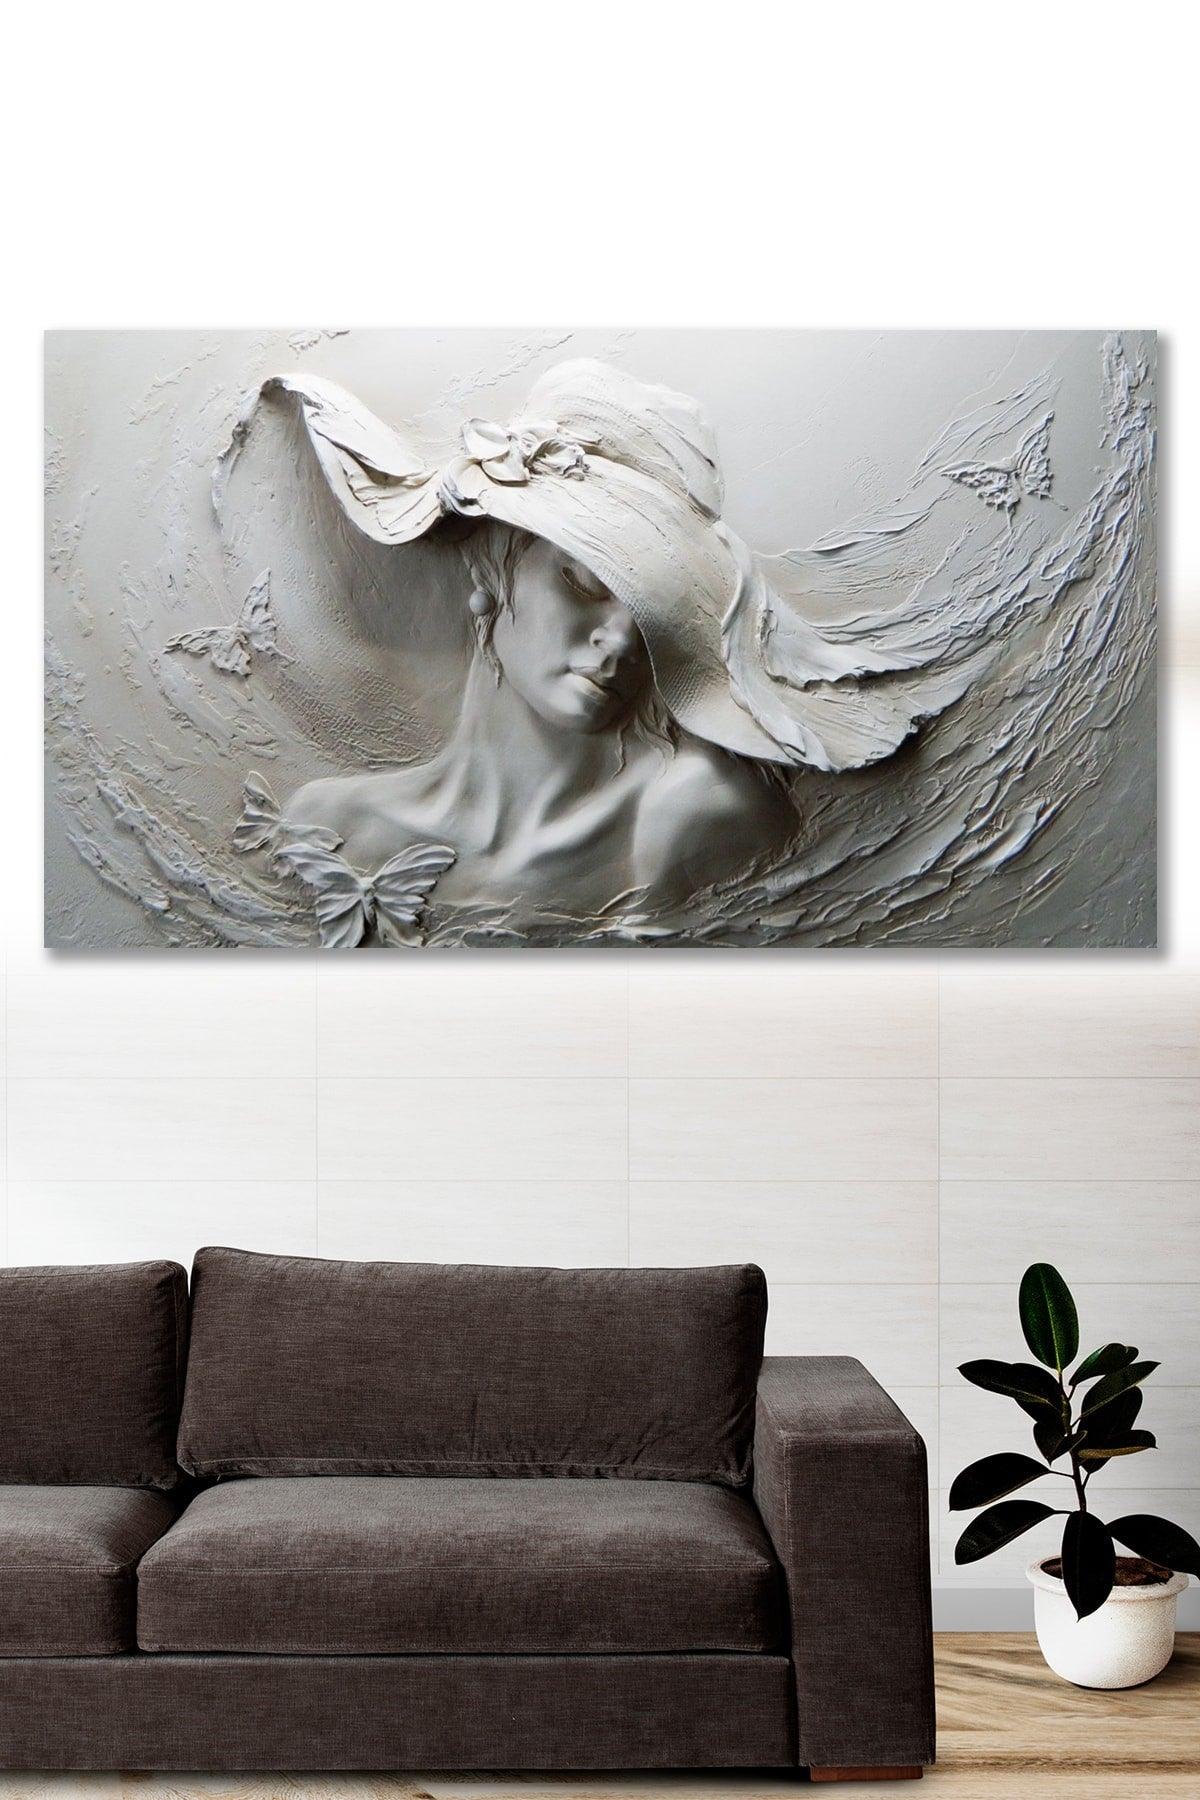 70x100 Decorative Canvas Wall Painting - Swordslife